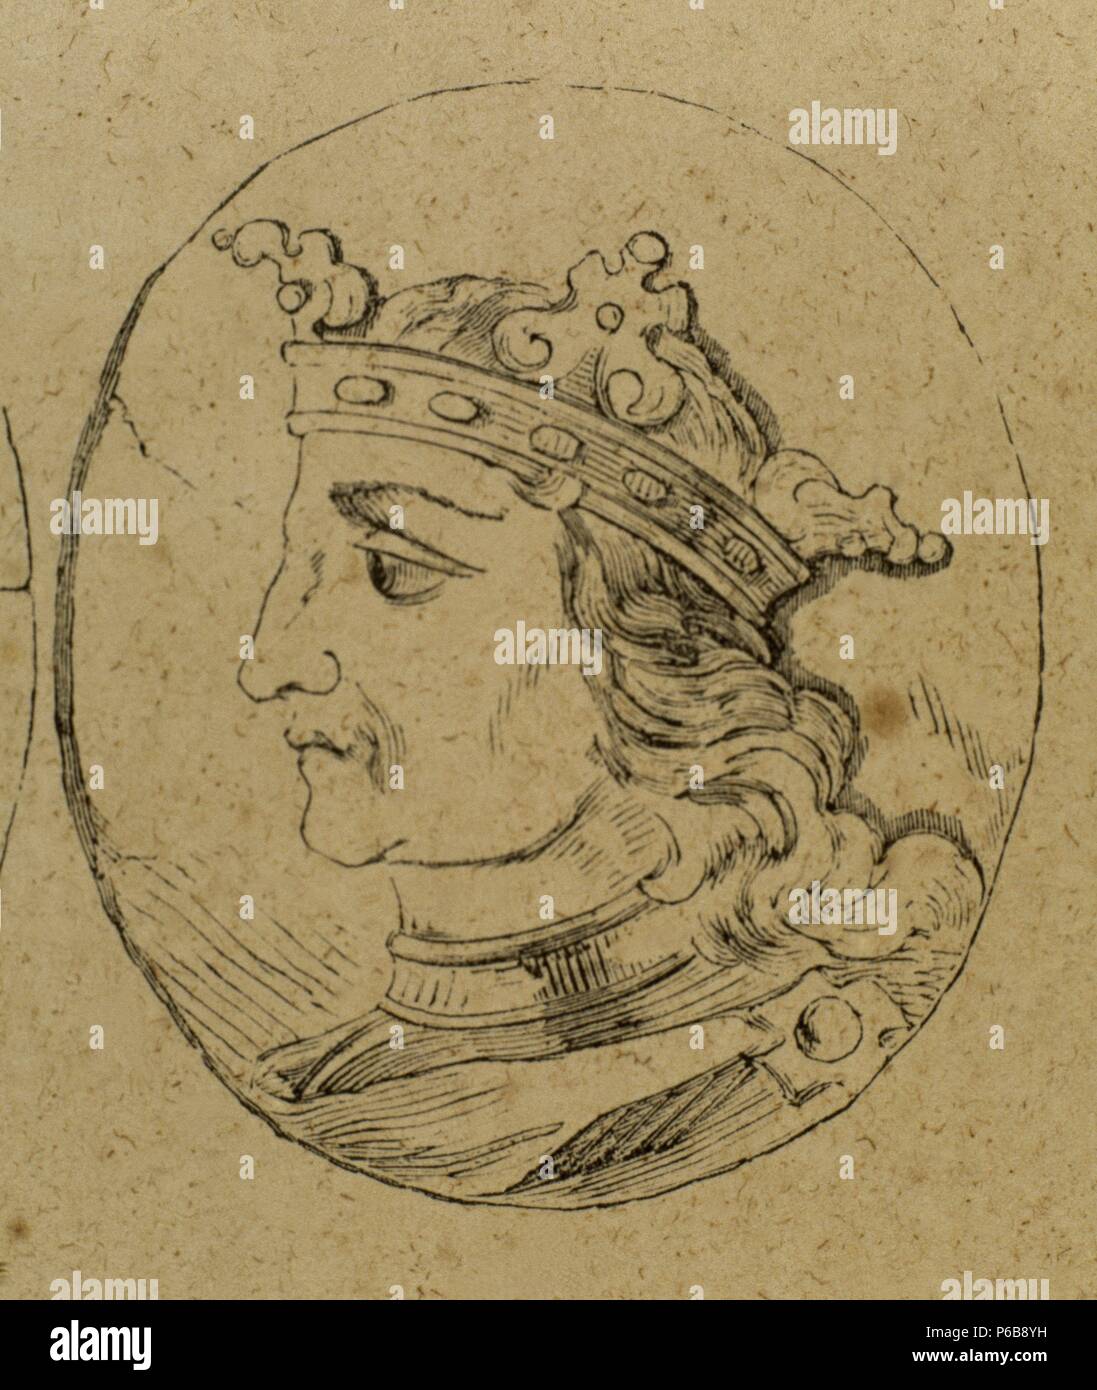 Ordono III of Leon (926-956). King of Leon from 951-956. Engraving. Stock Photo